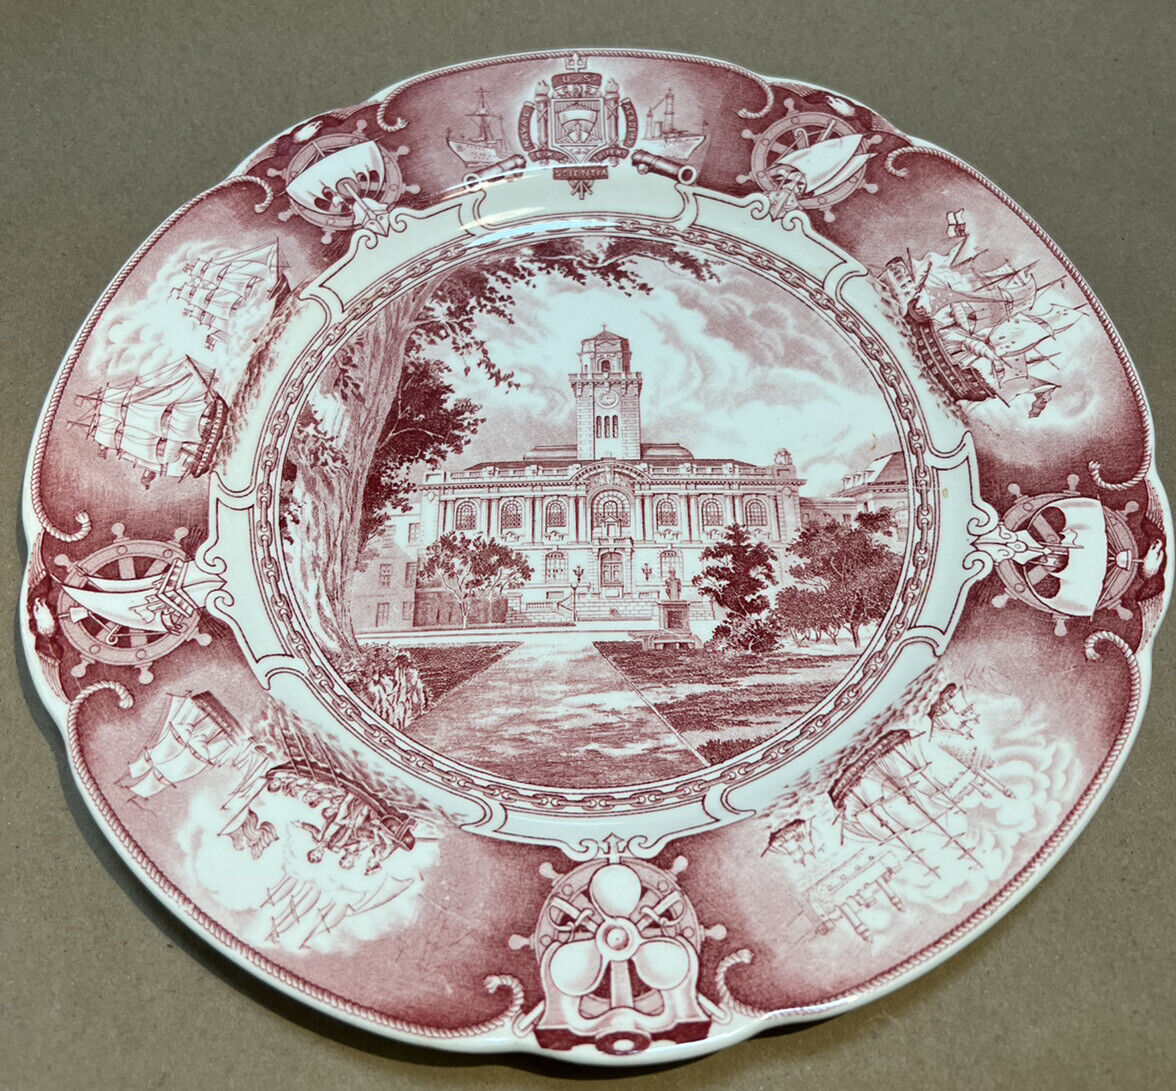 Wedgwood Etruria U.S. Naval Academy Vintage Commemorative Plate - Mahan Hall